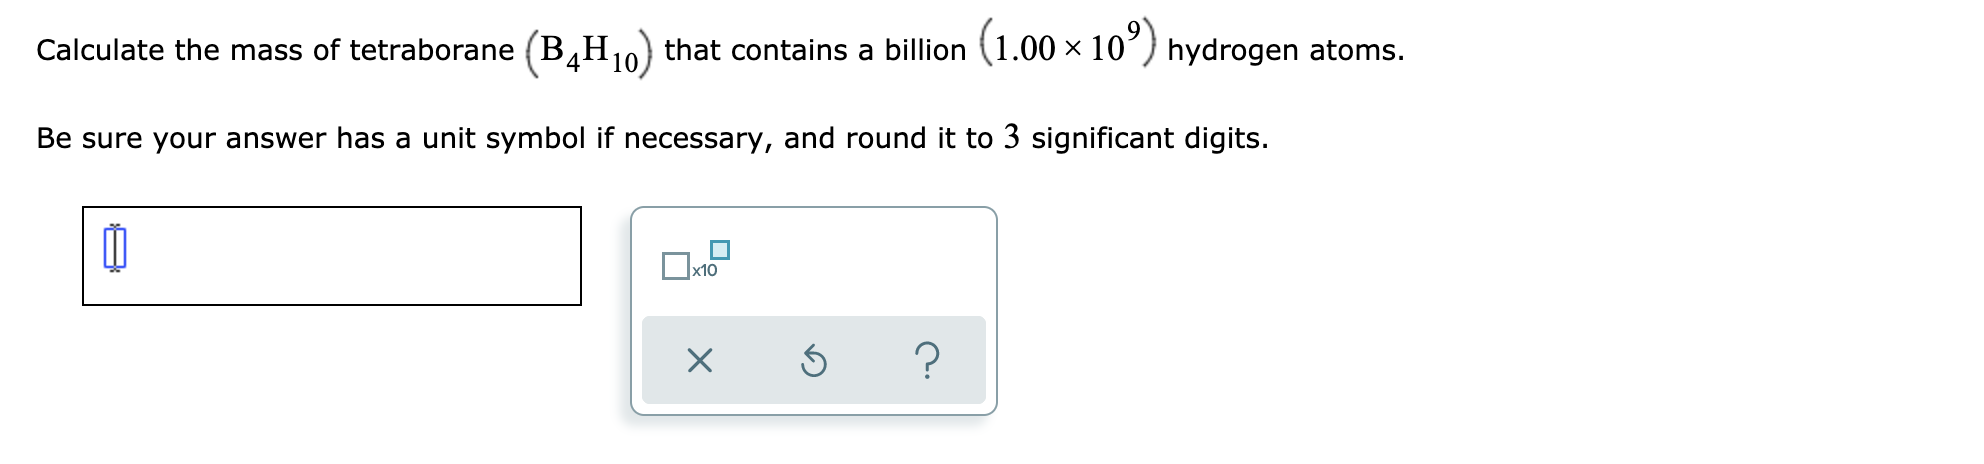 Calculate the mass of tetraborane (B,H10) that contains a billion (1.00 × 10´) hydrogen atoms.
